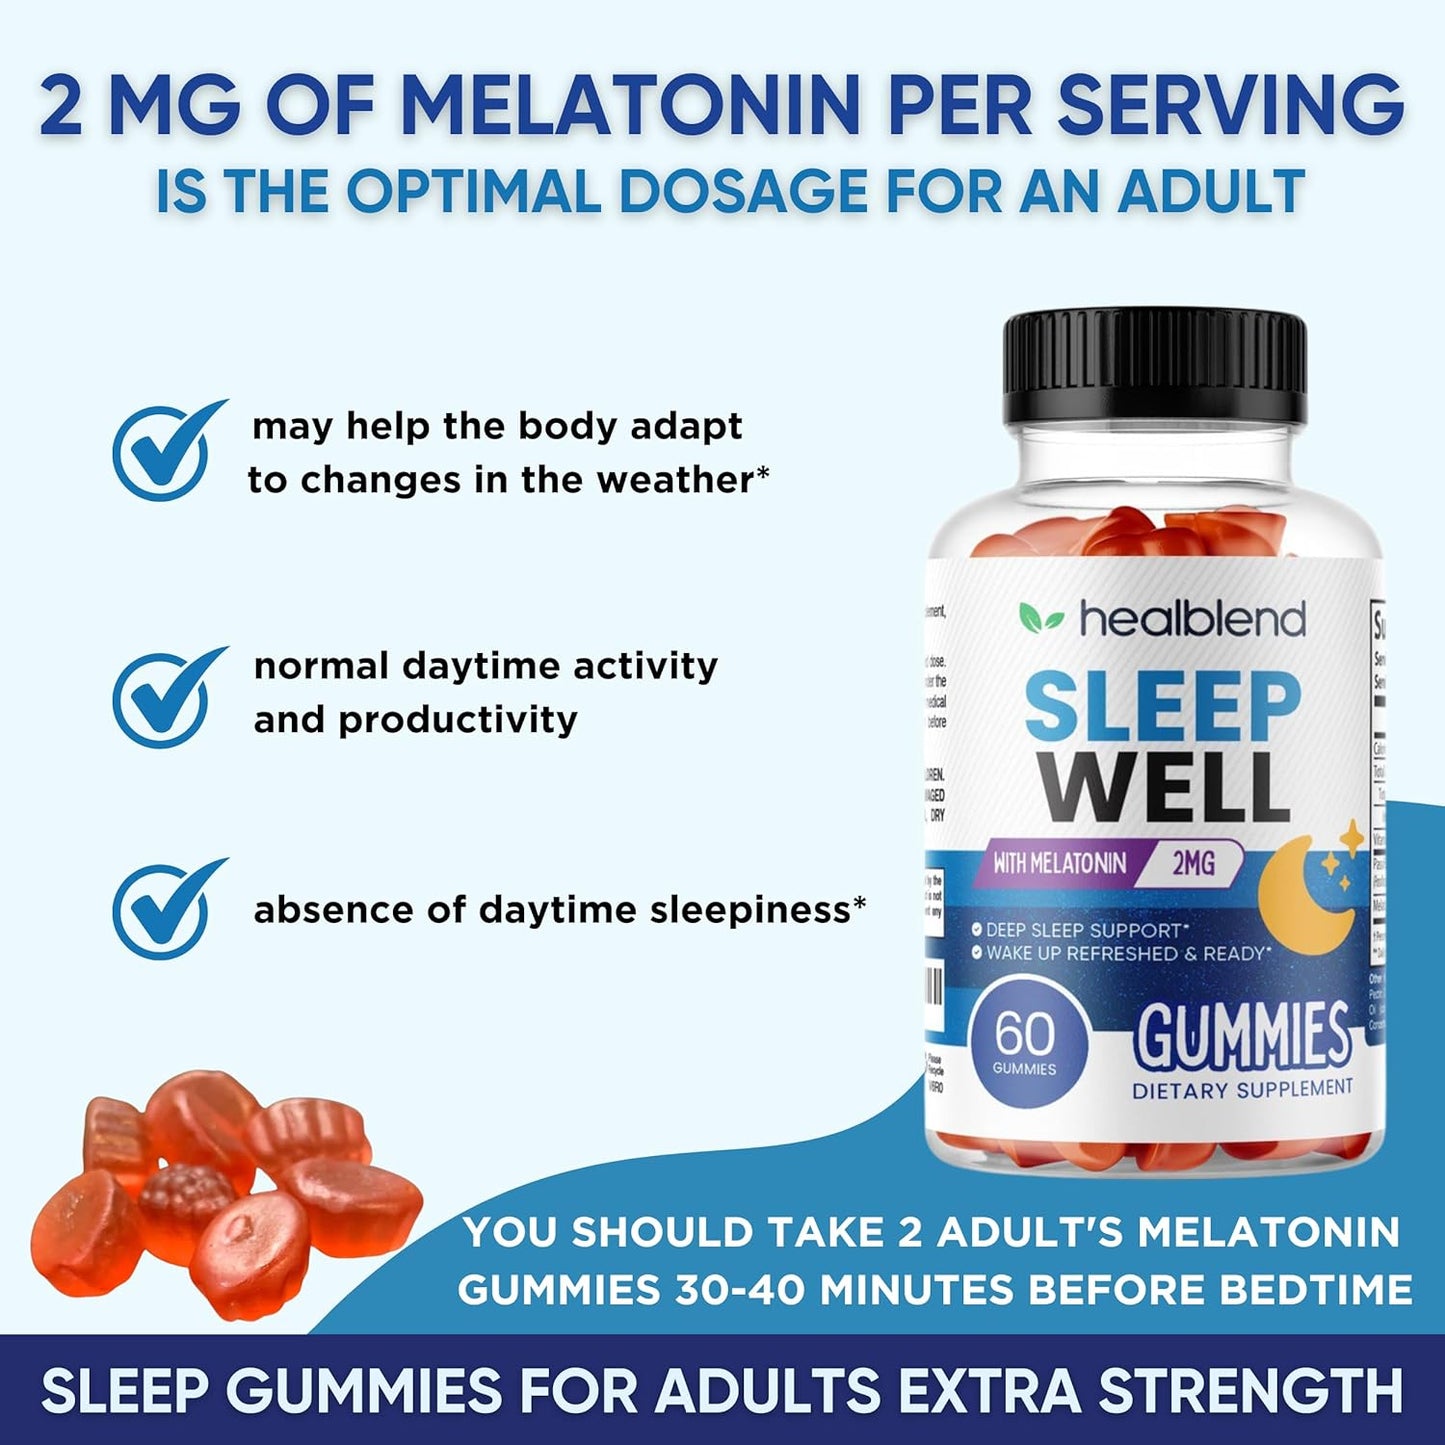 Sleep Well Gummies with Melatonin 2mg